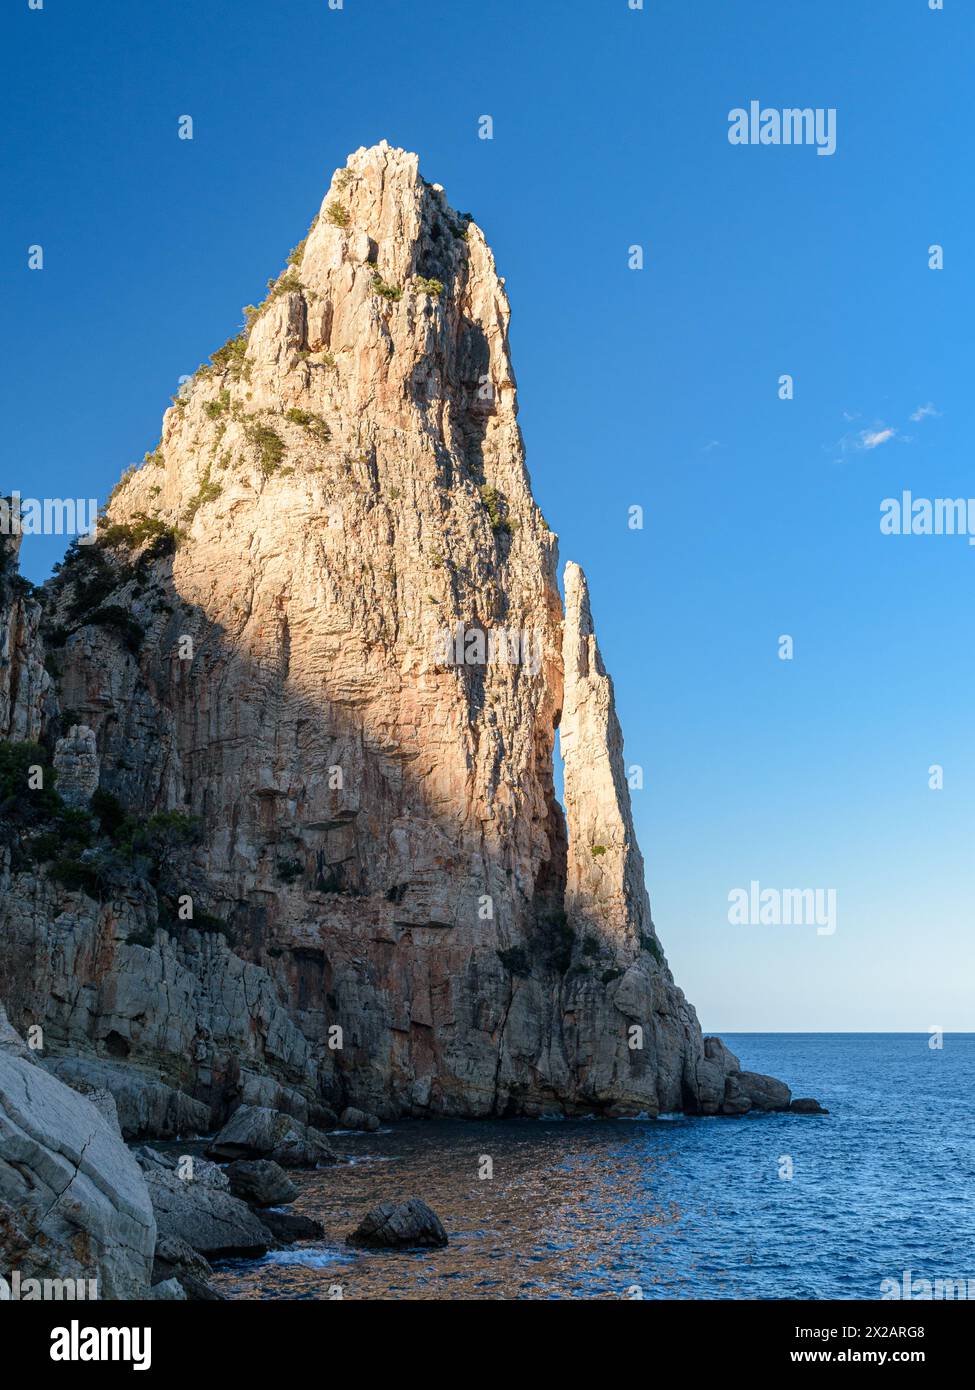 Felskalksteinspitze namens Pedra Longa im Golf von Orosei bei Santa Maria Navarrese, einem kleinen Meeresdorf in Ogliastra im Osten Sardiniens Stockfoto